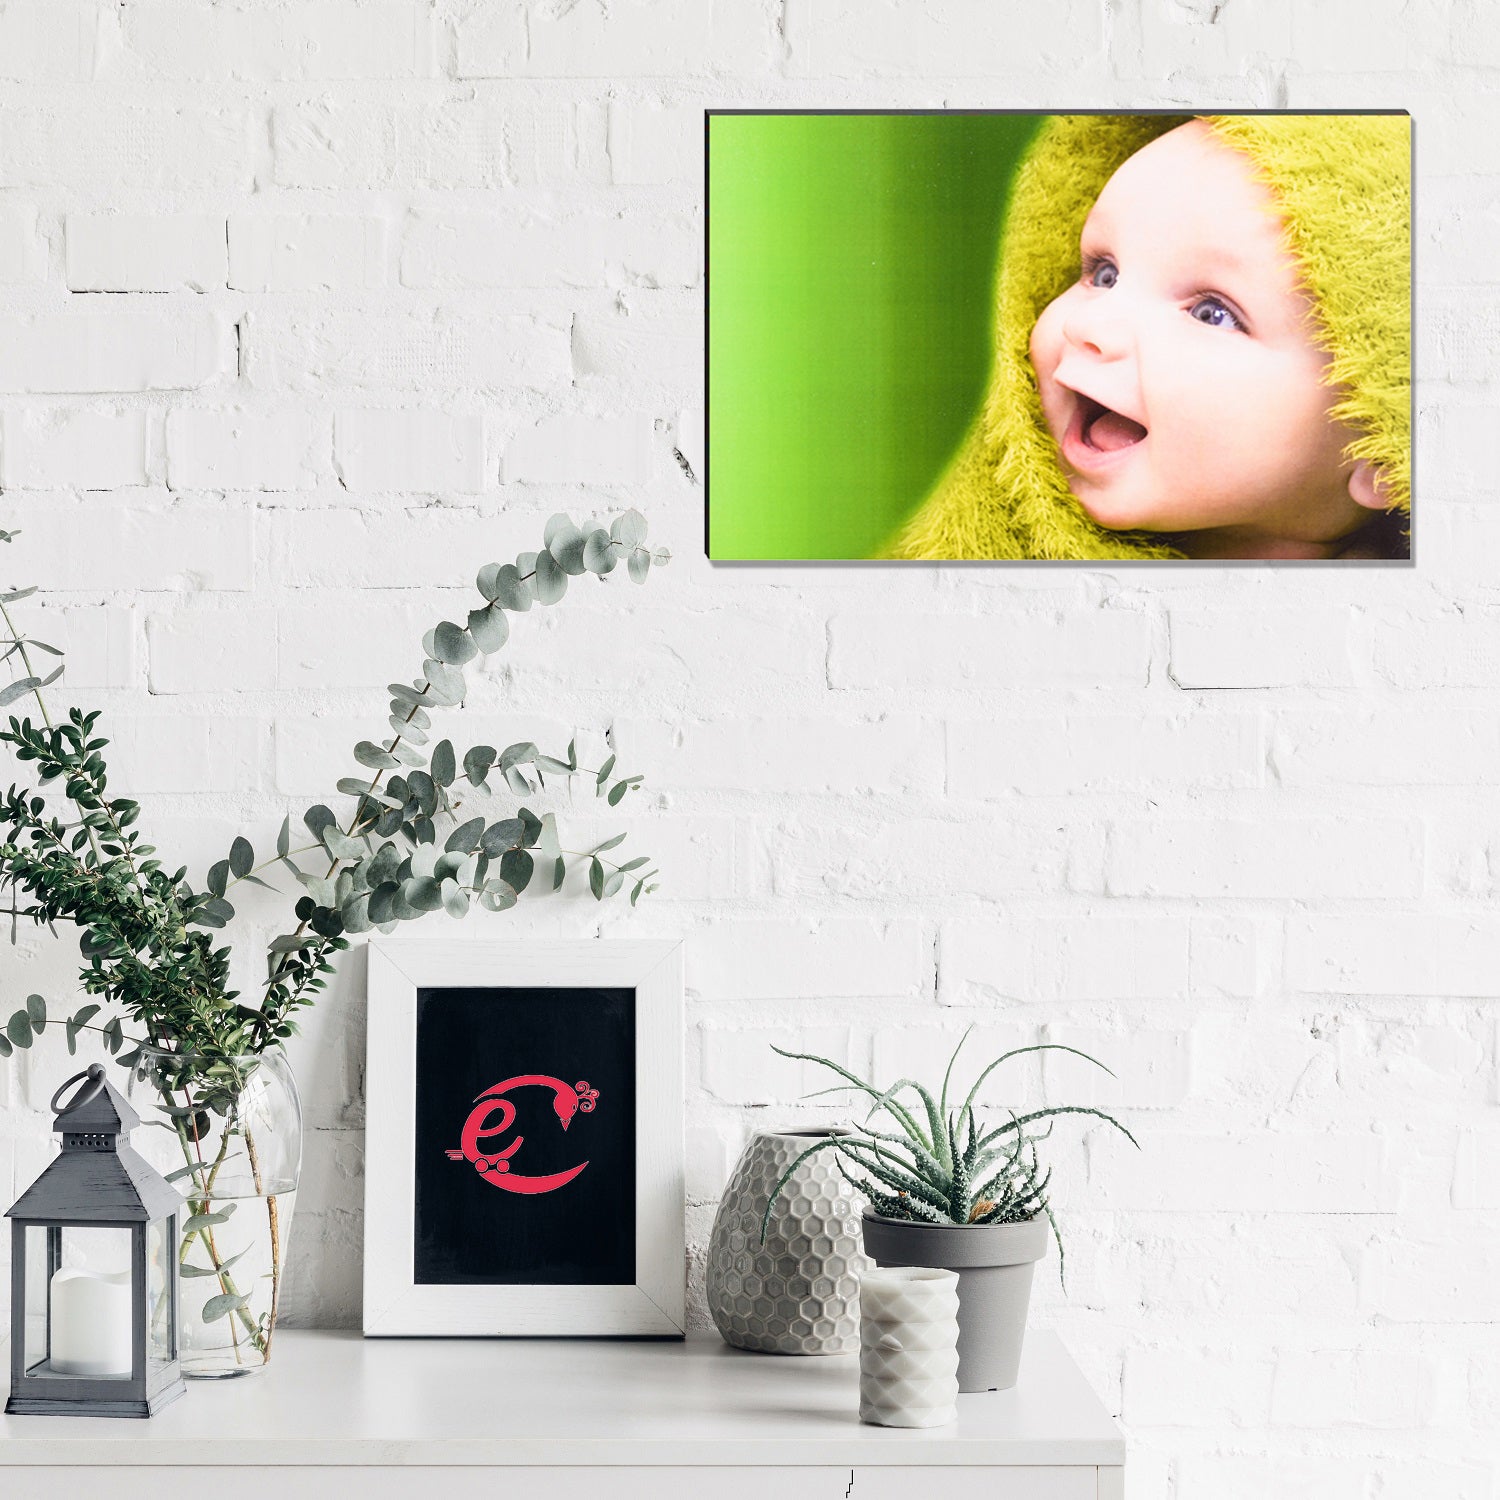 Cute Smiling Baby Painting Digital Printed Wall Art 1